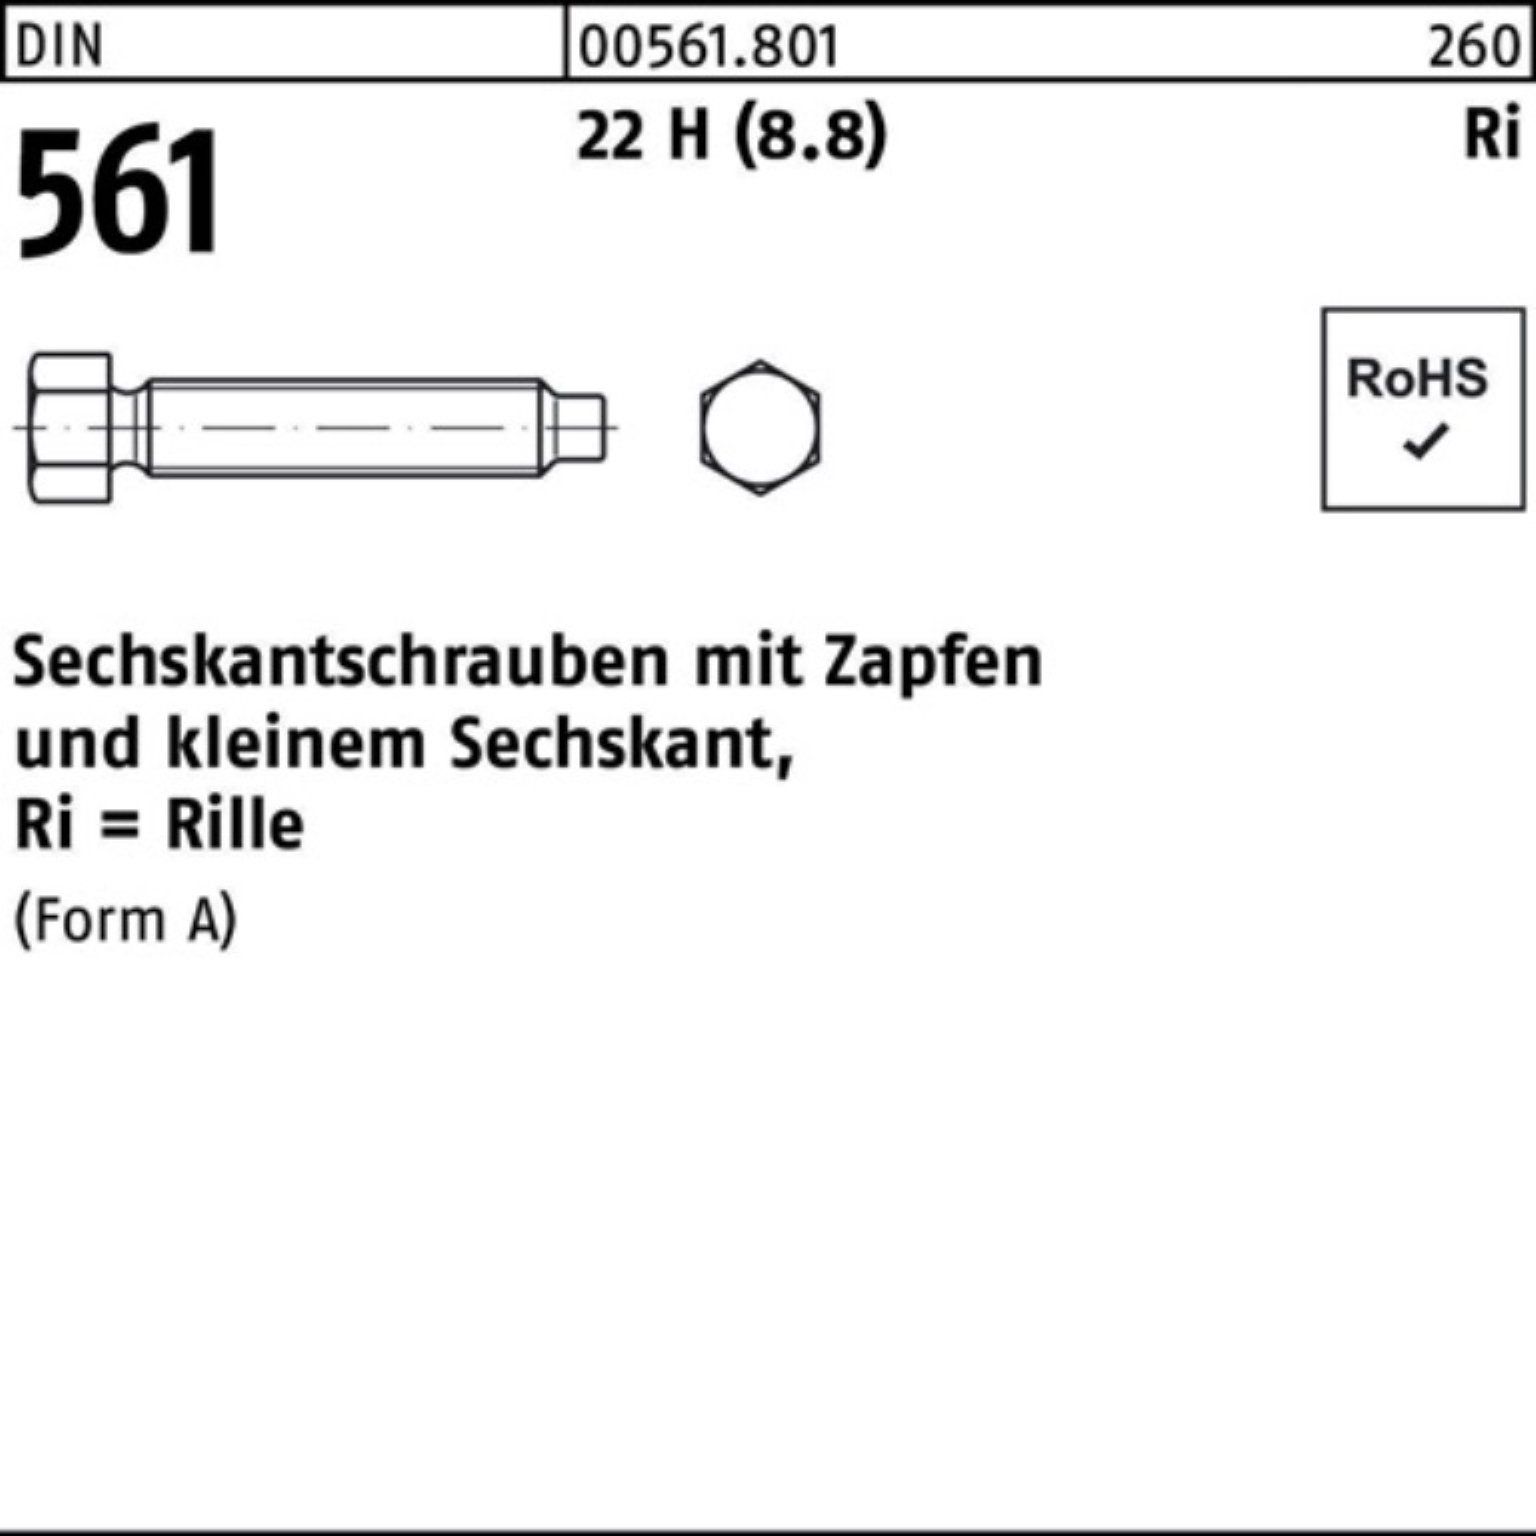 Reyher Sechskantschraube 100er Pack Sechskantschraube 24x 60 H DIN AM Zapfen 1 561 St (8.8) 22